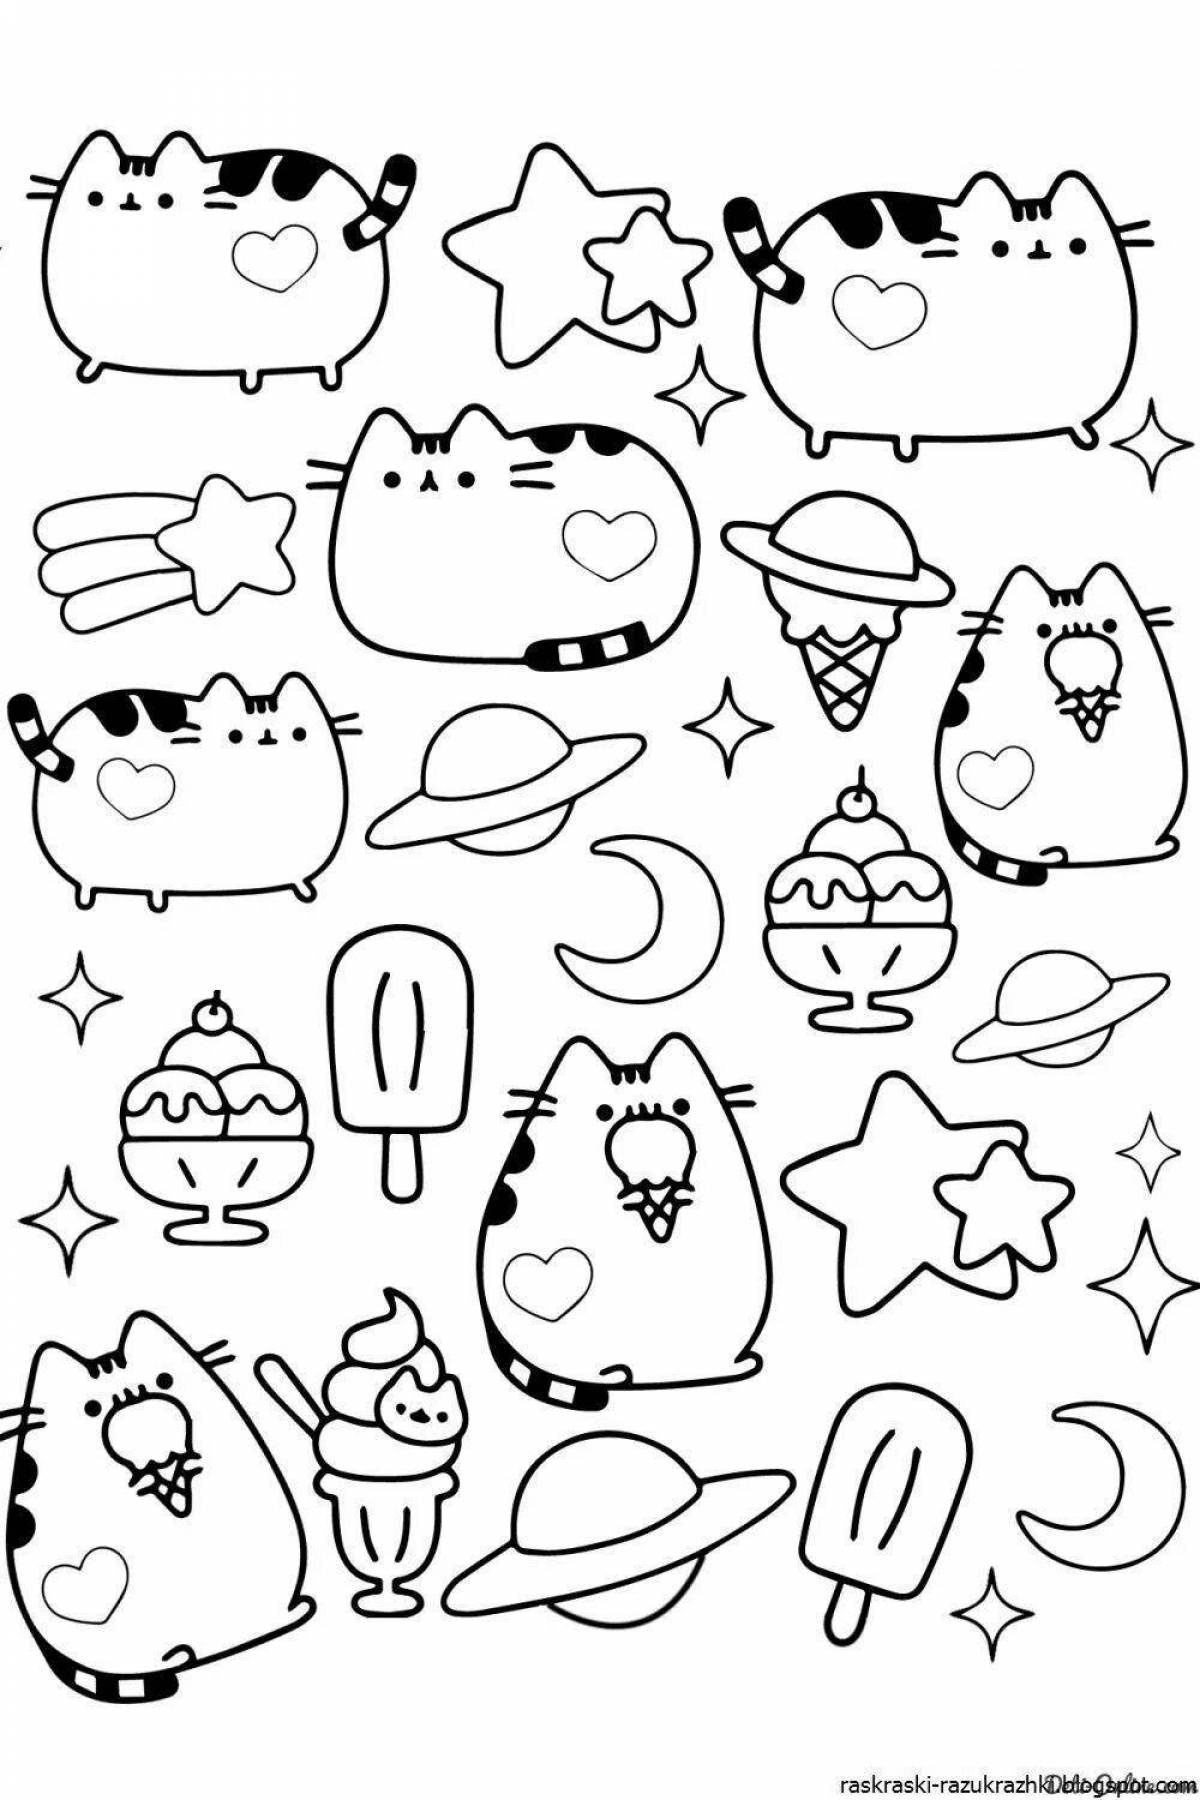 Coloring page cute pusheen cat